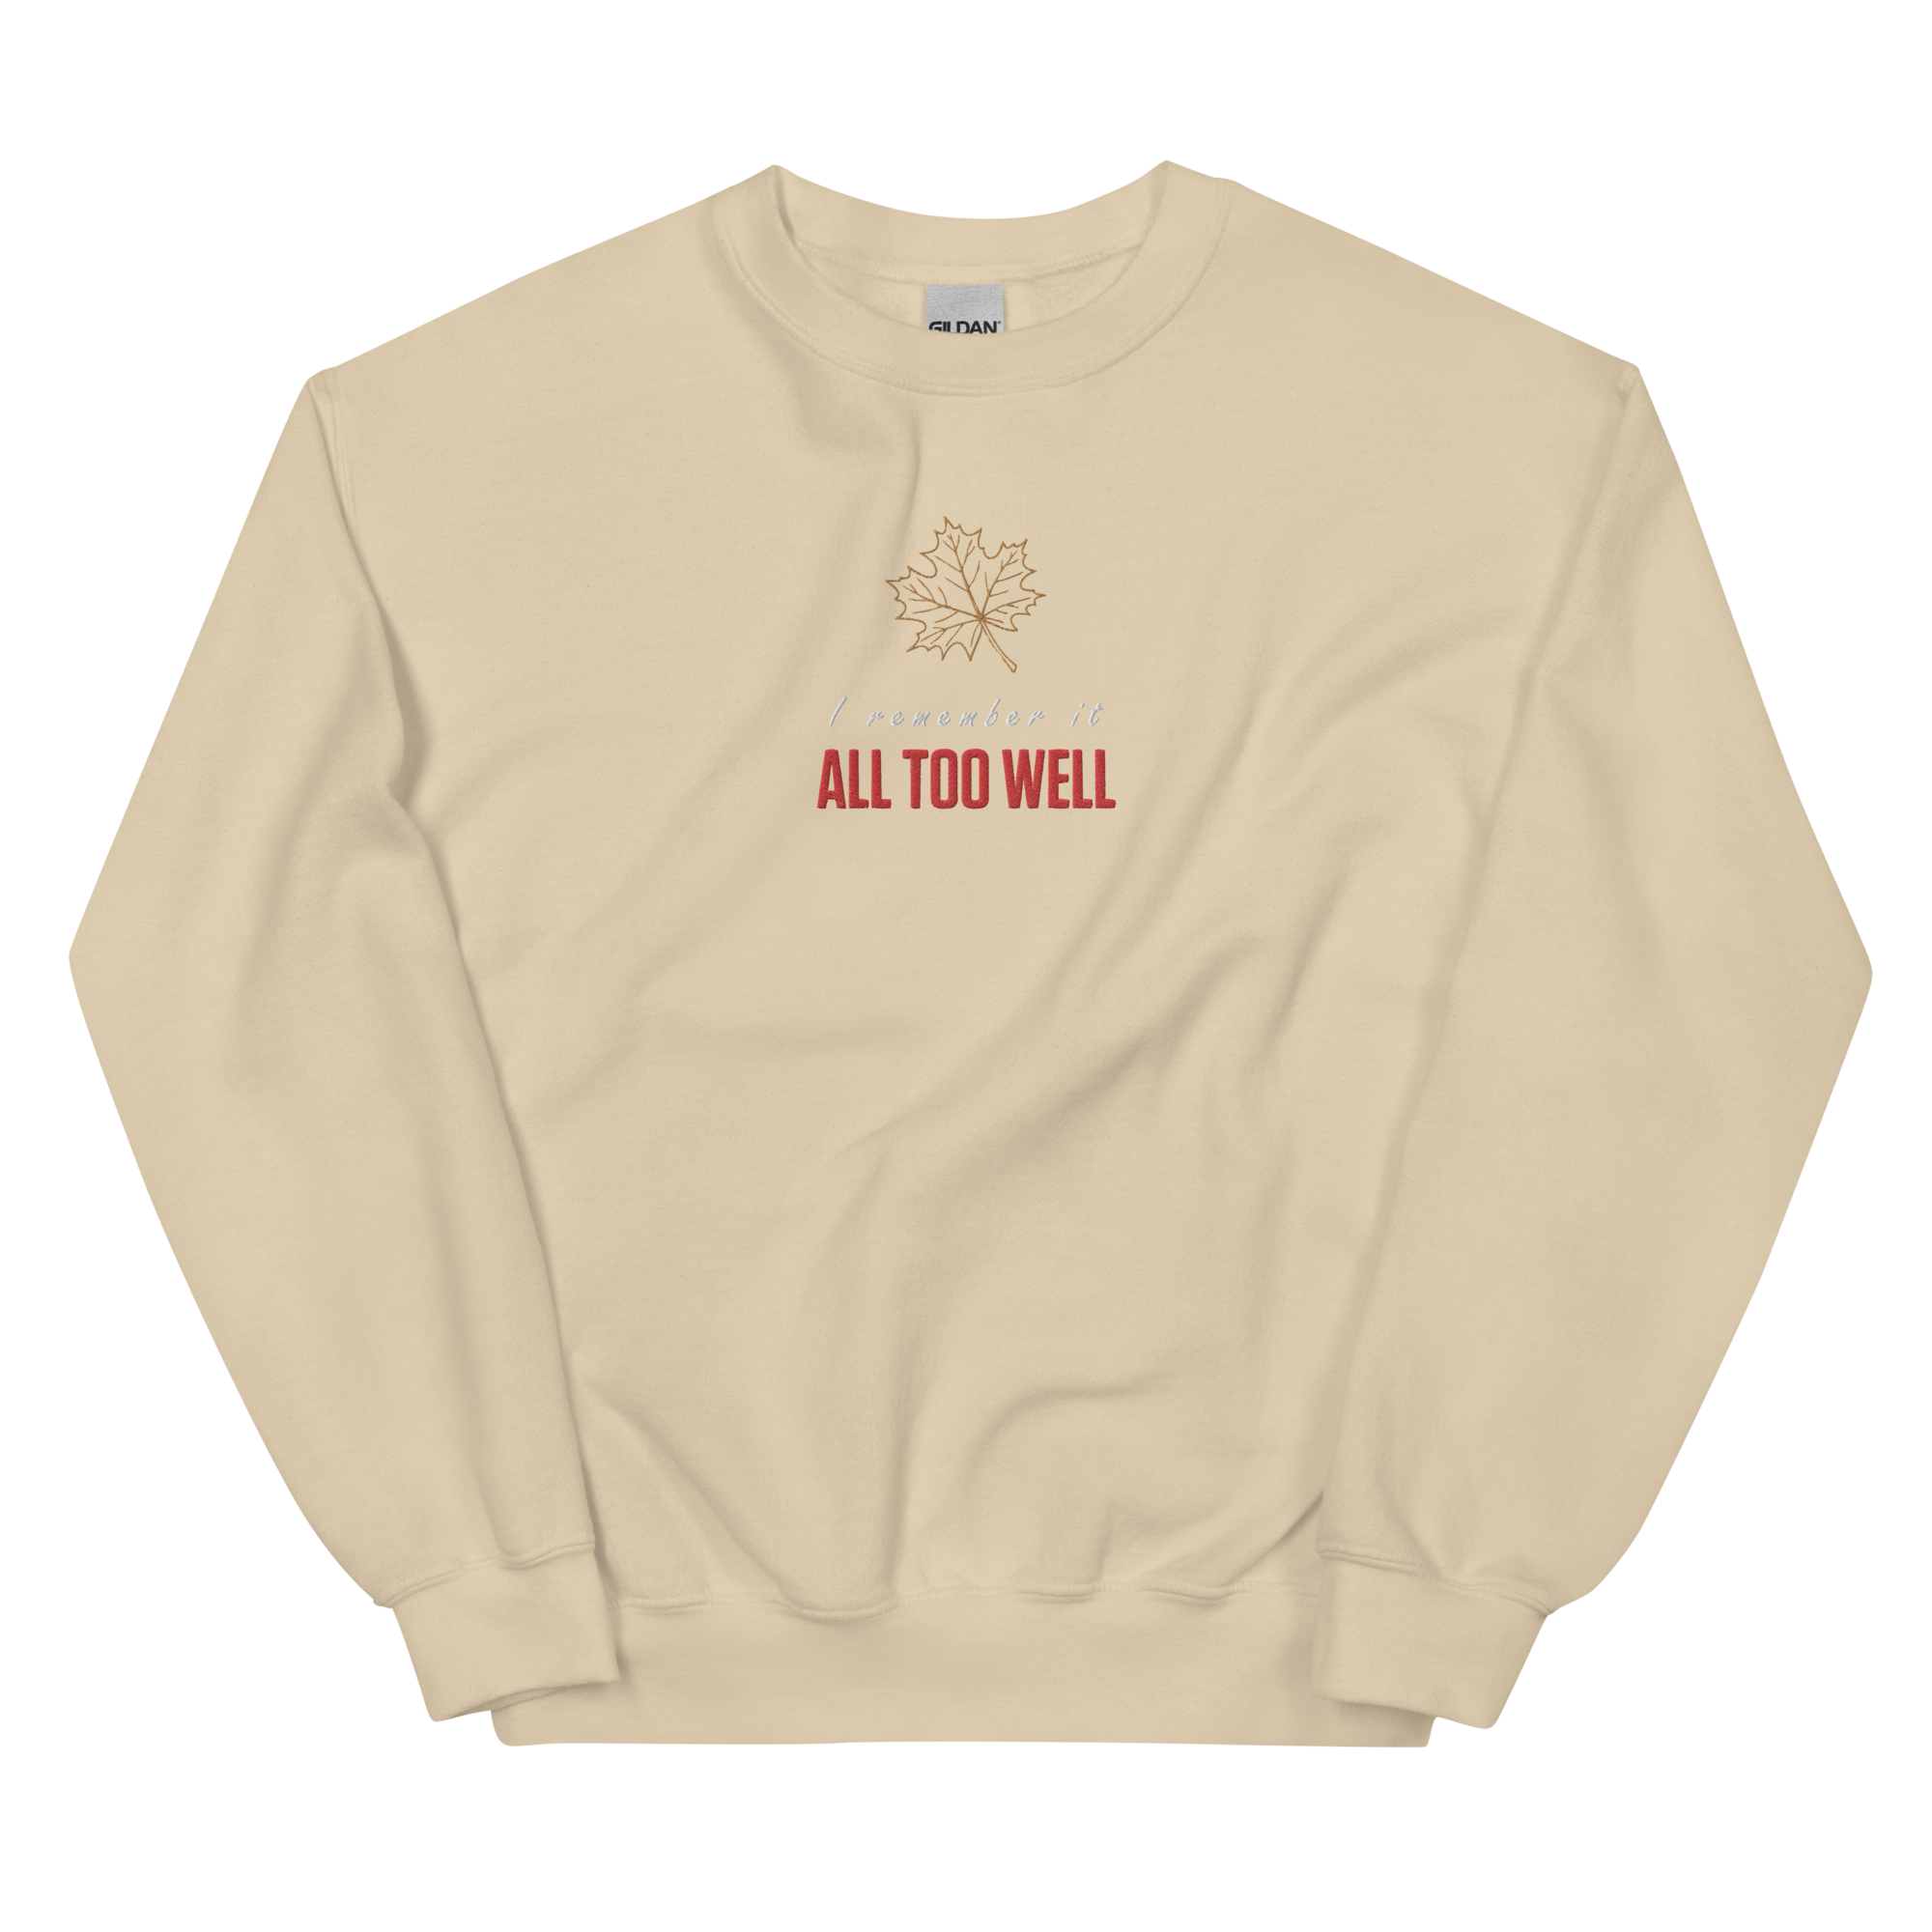 Taylor Swift  "All Too Well" Embroidered Crewneck Sweatshirt